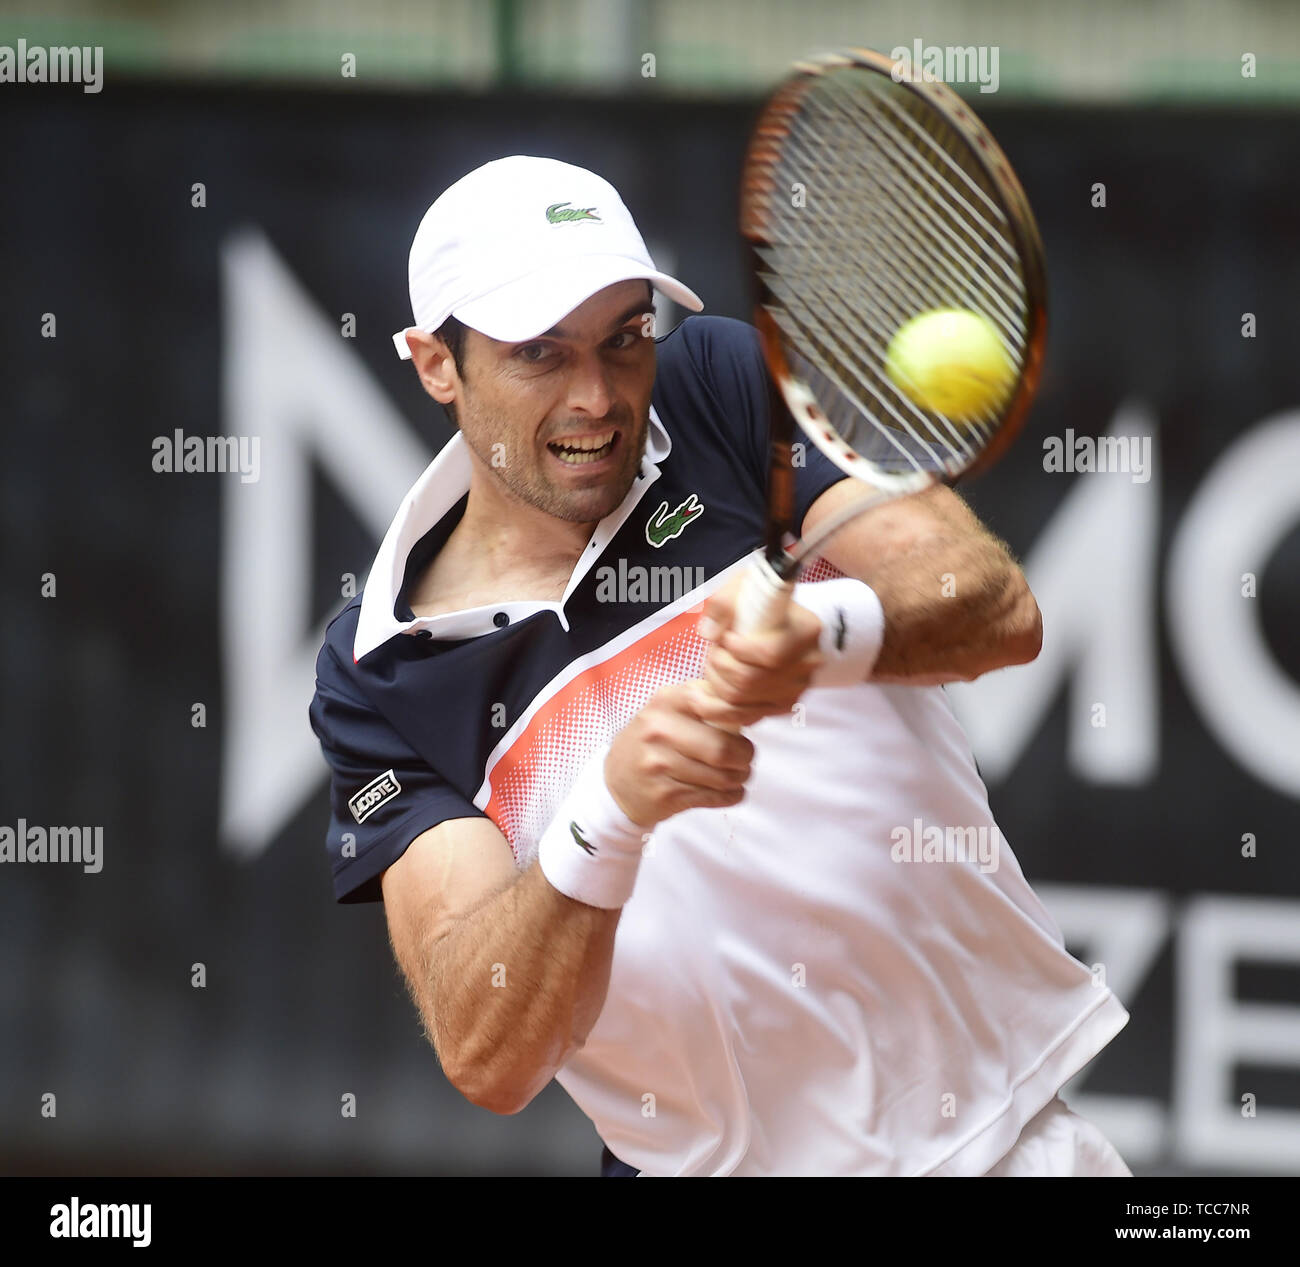 Pablo andujar tennis hi-res stock photography and images - Alamy